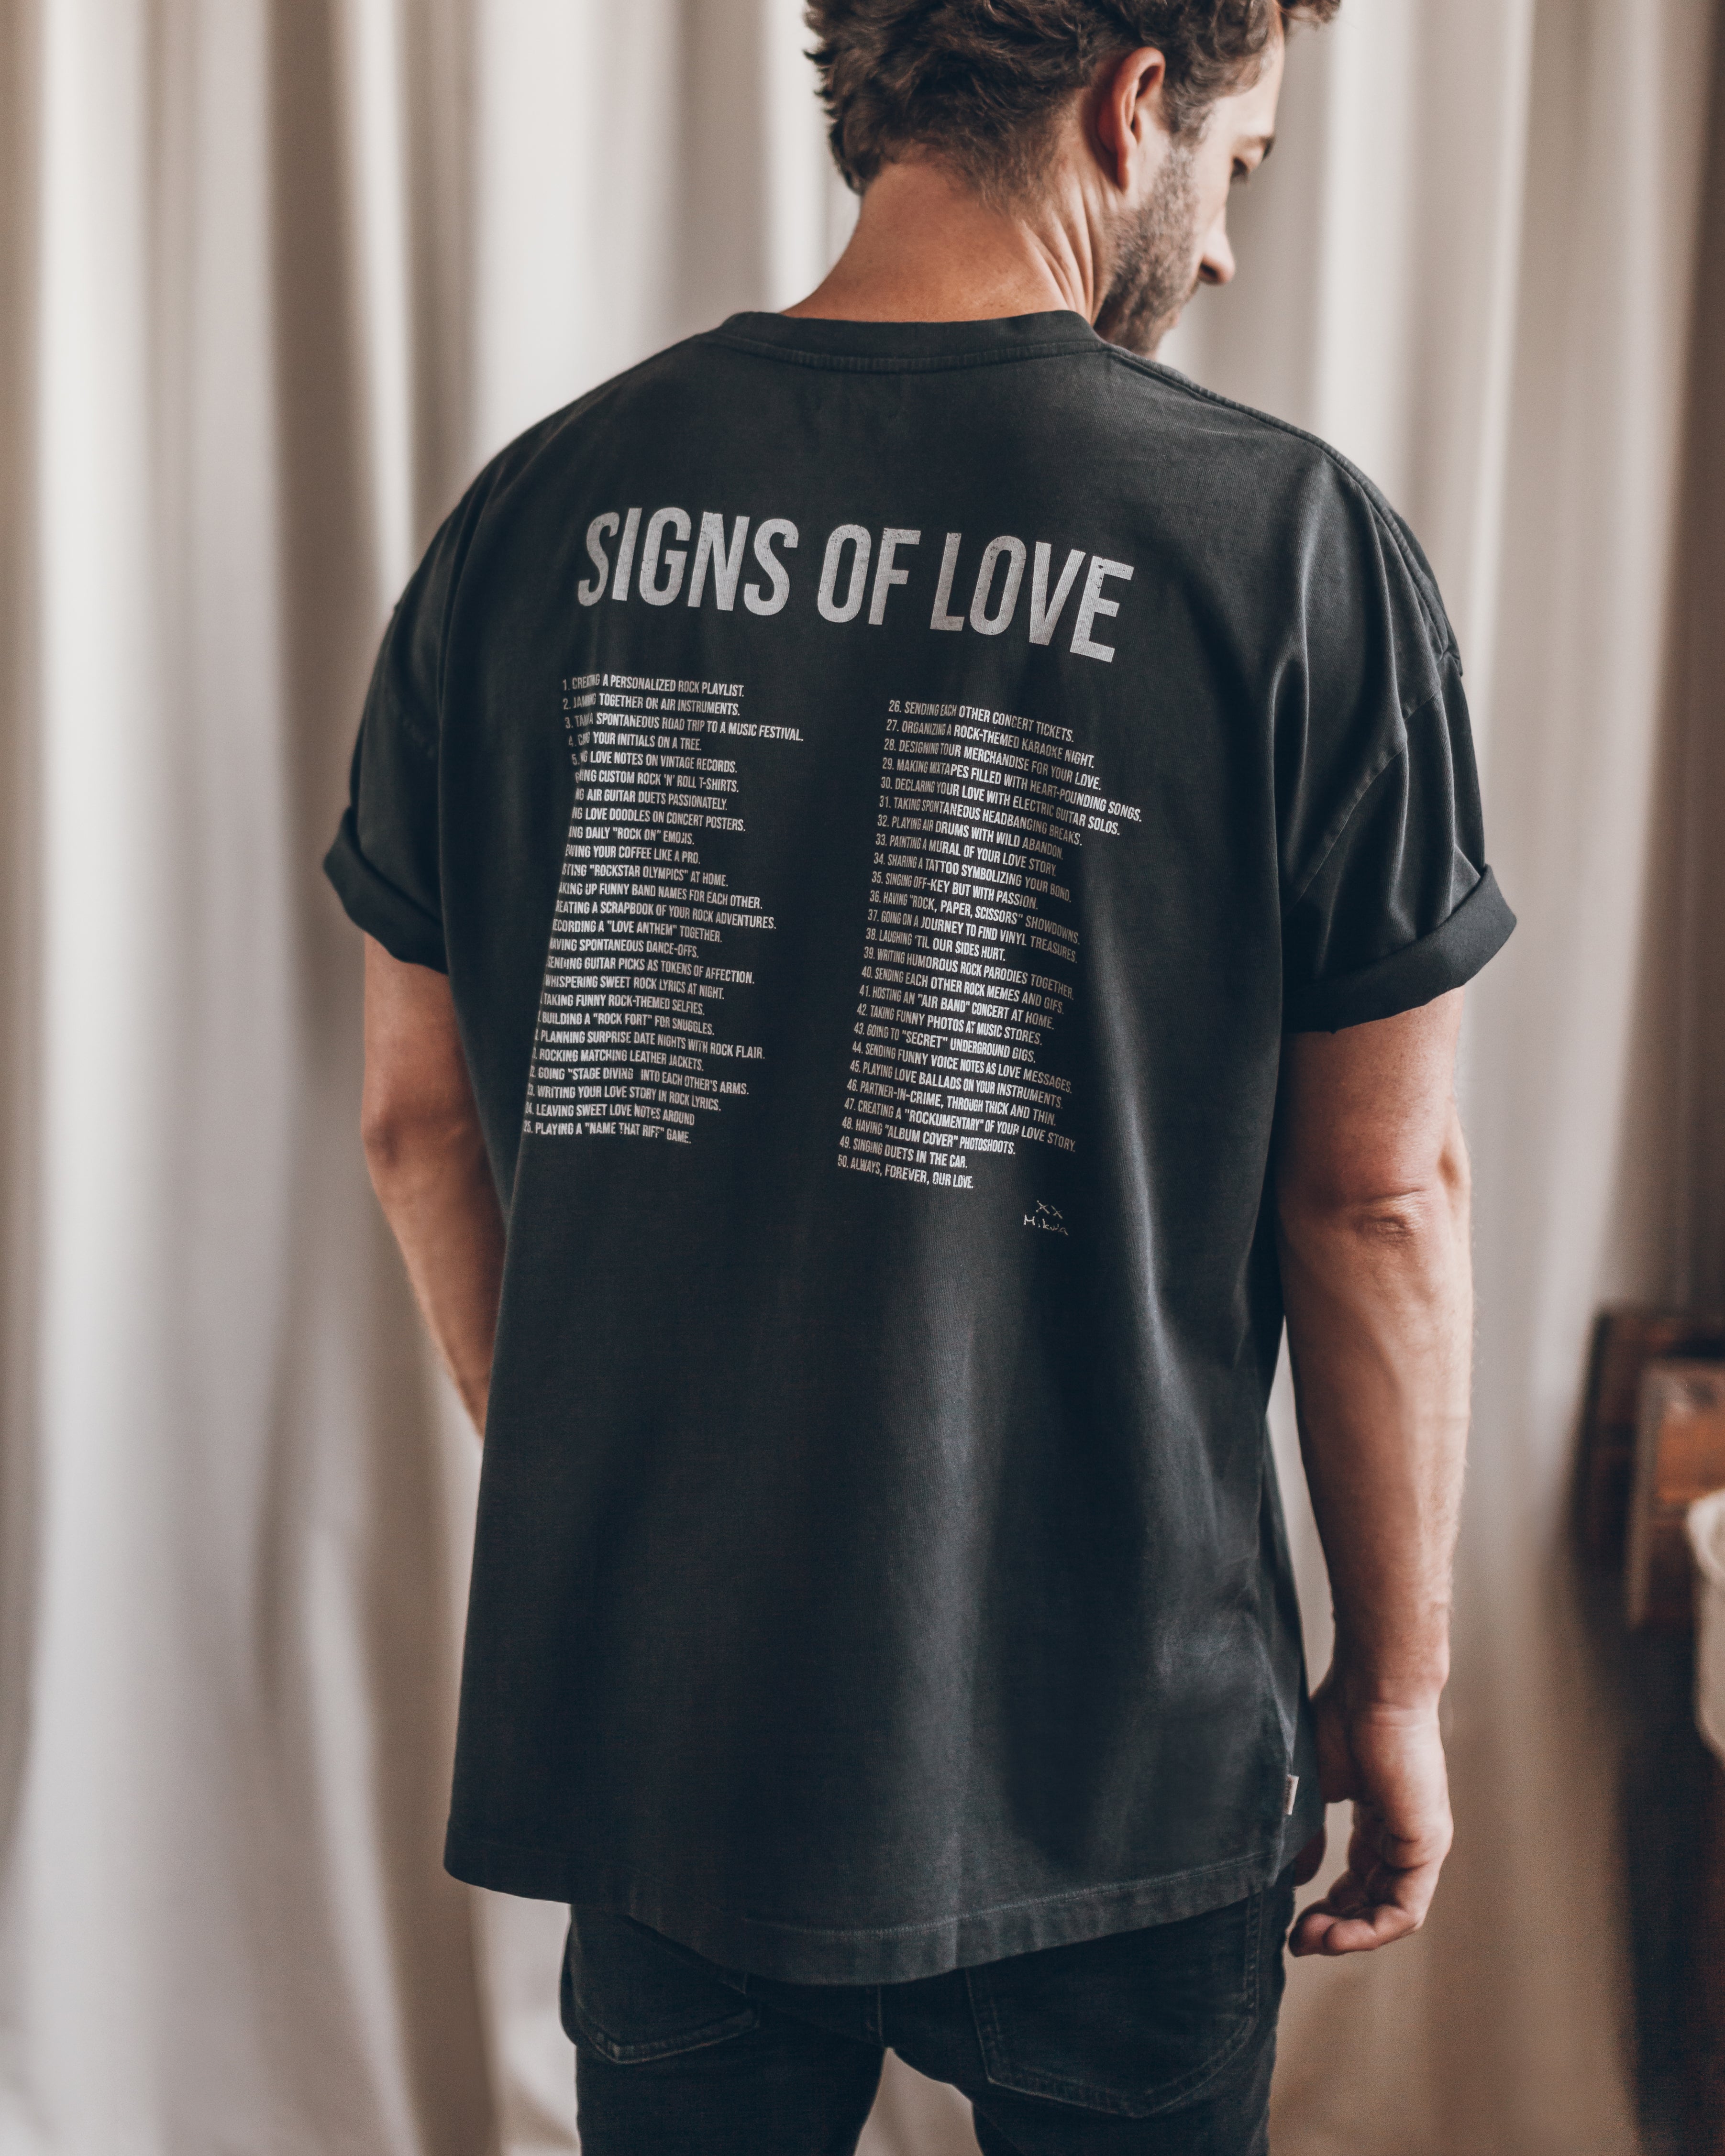 The Dark Love Signs Unisex T-Shirt